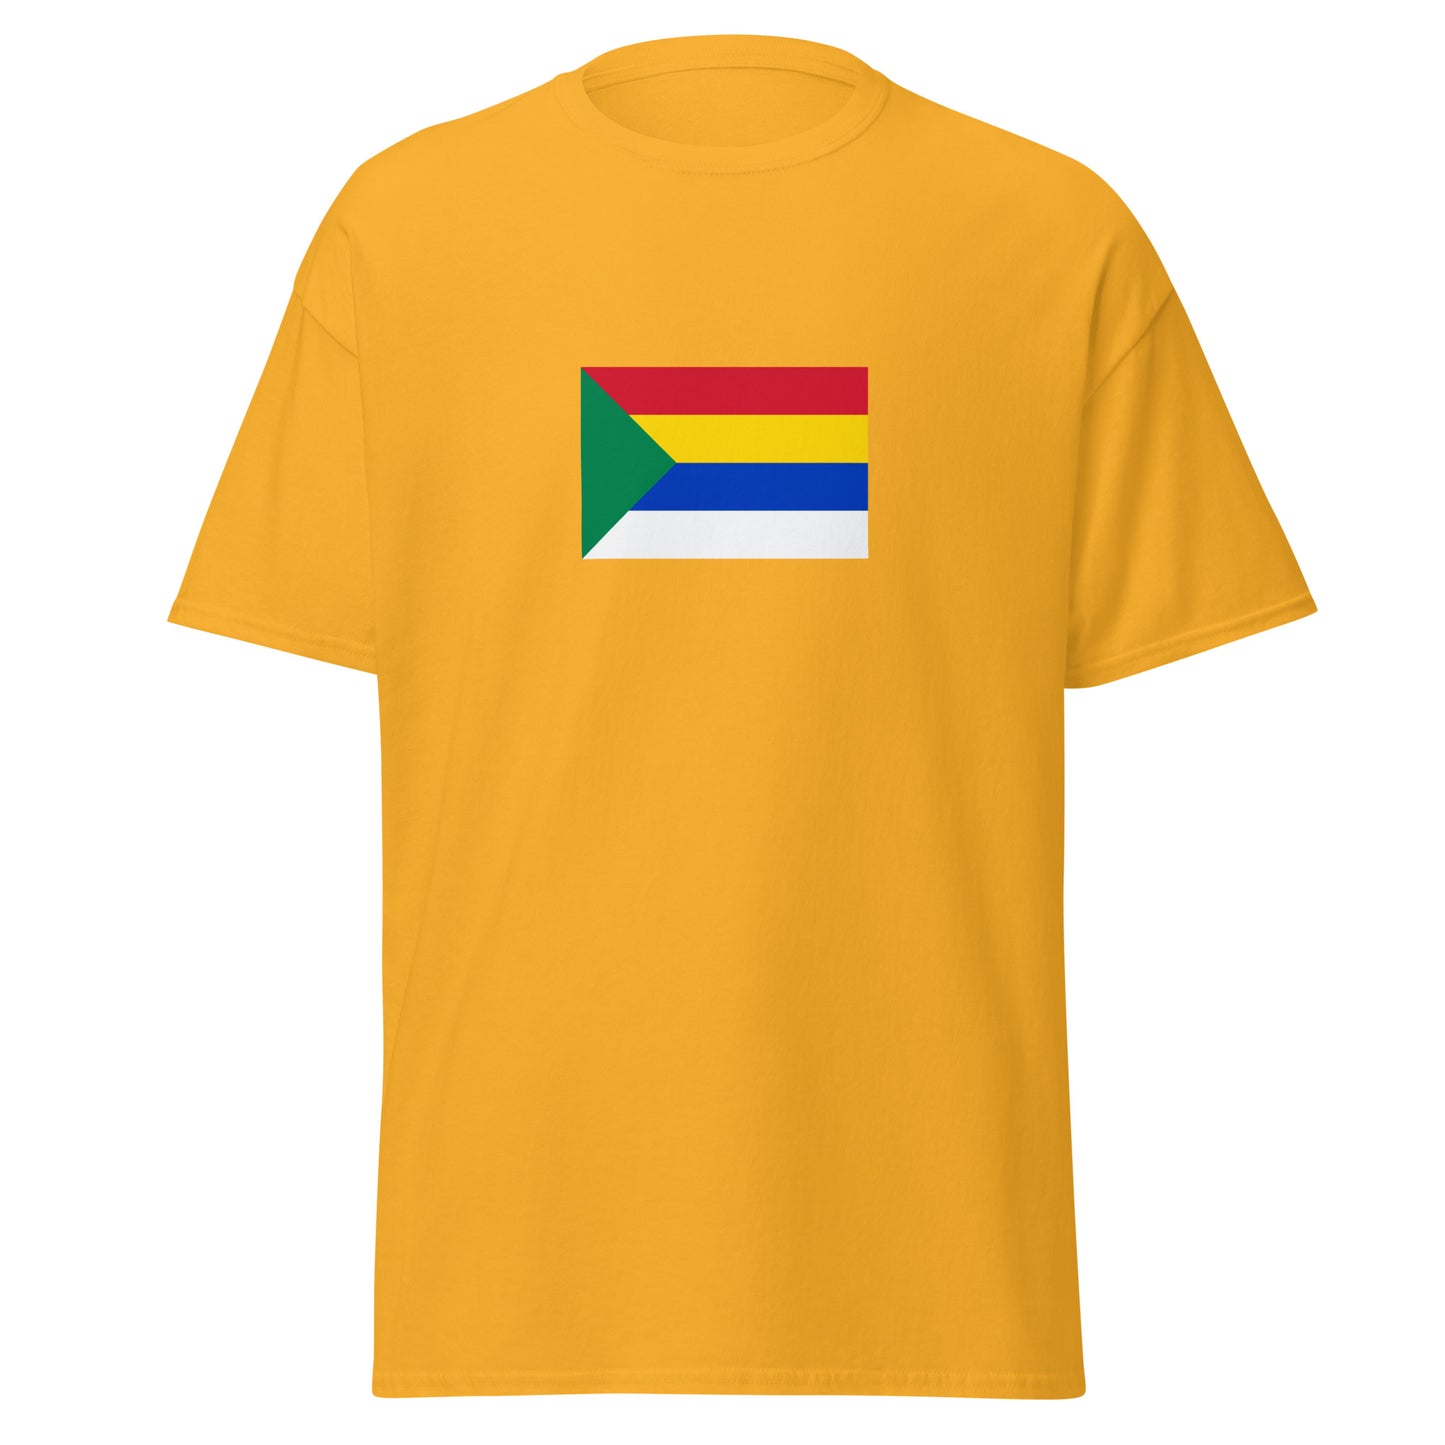 Israel - Druze | Ethnic Israel Flag Interactive T-shirt